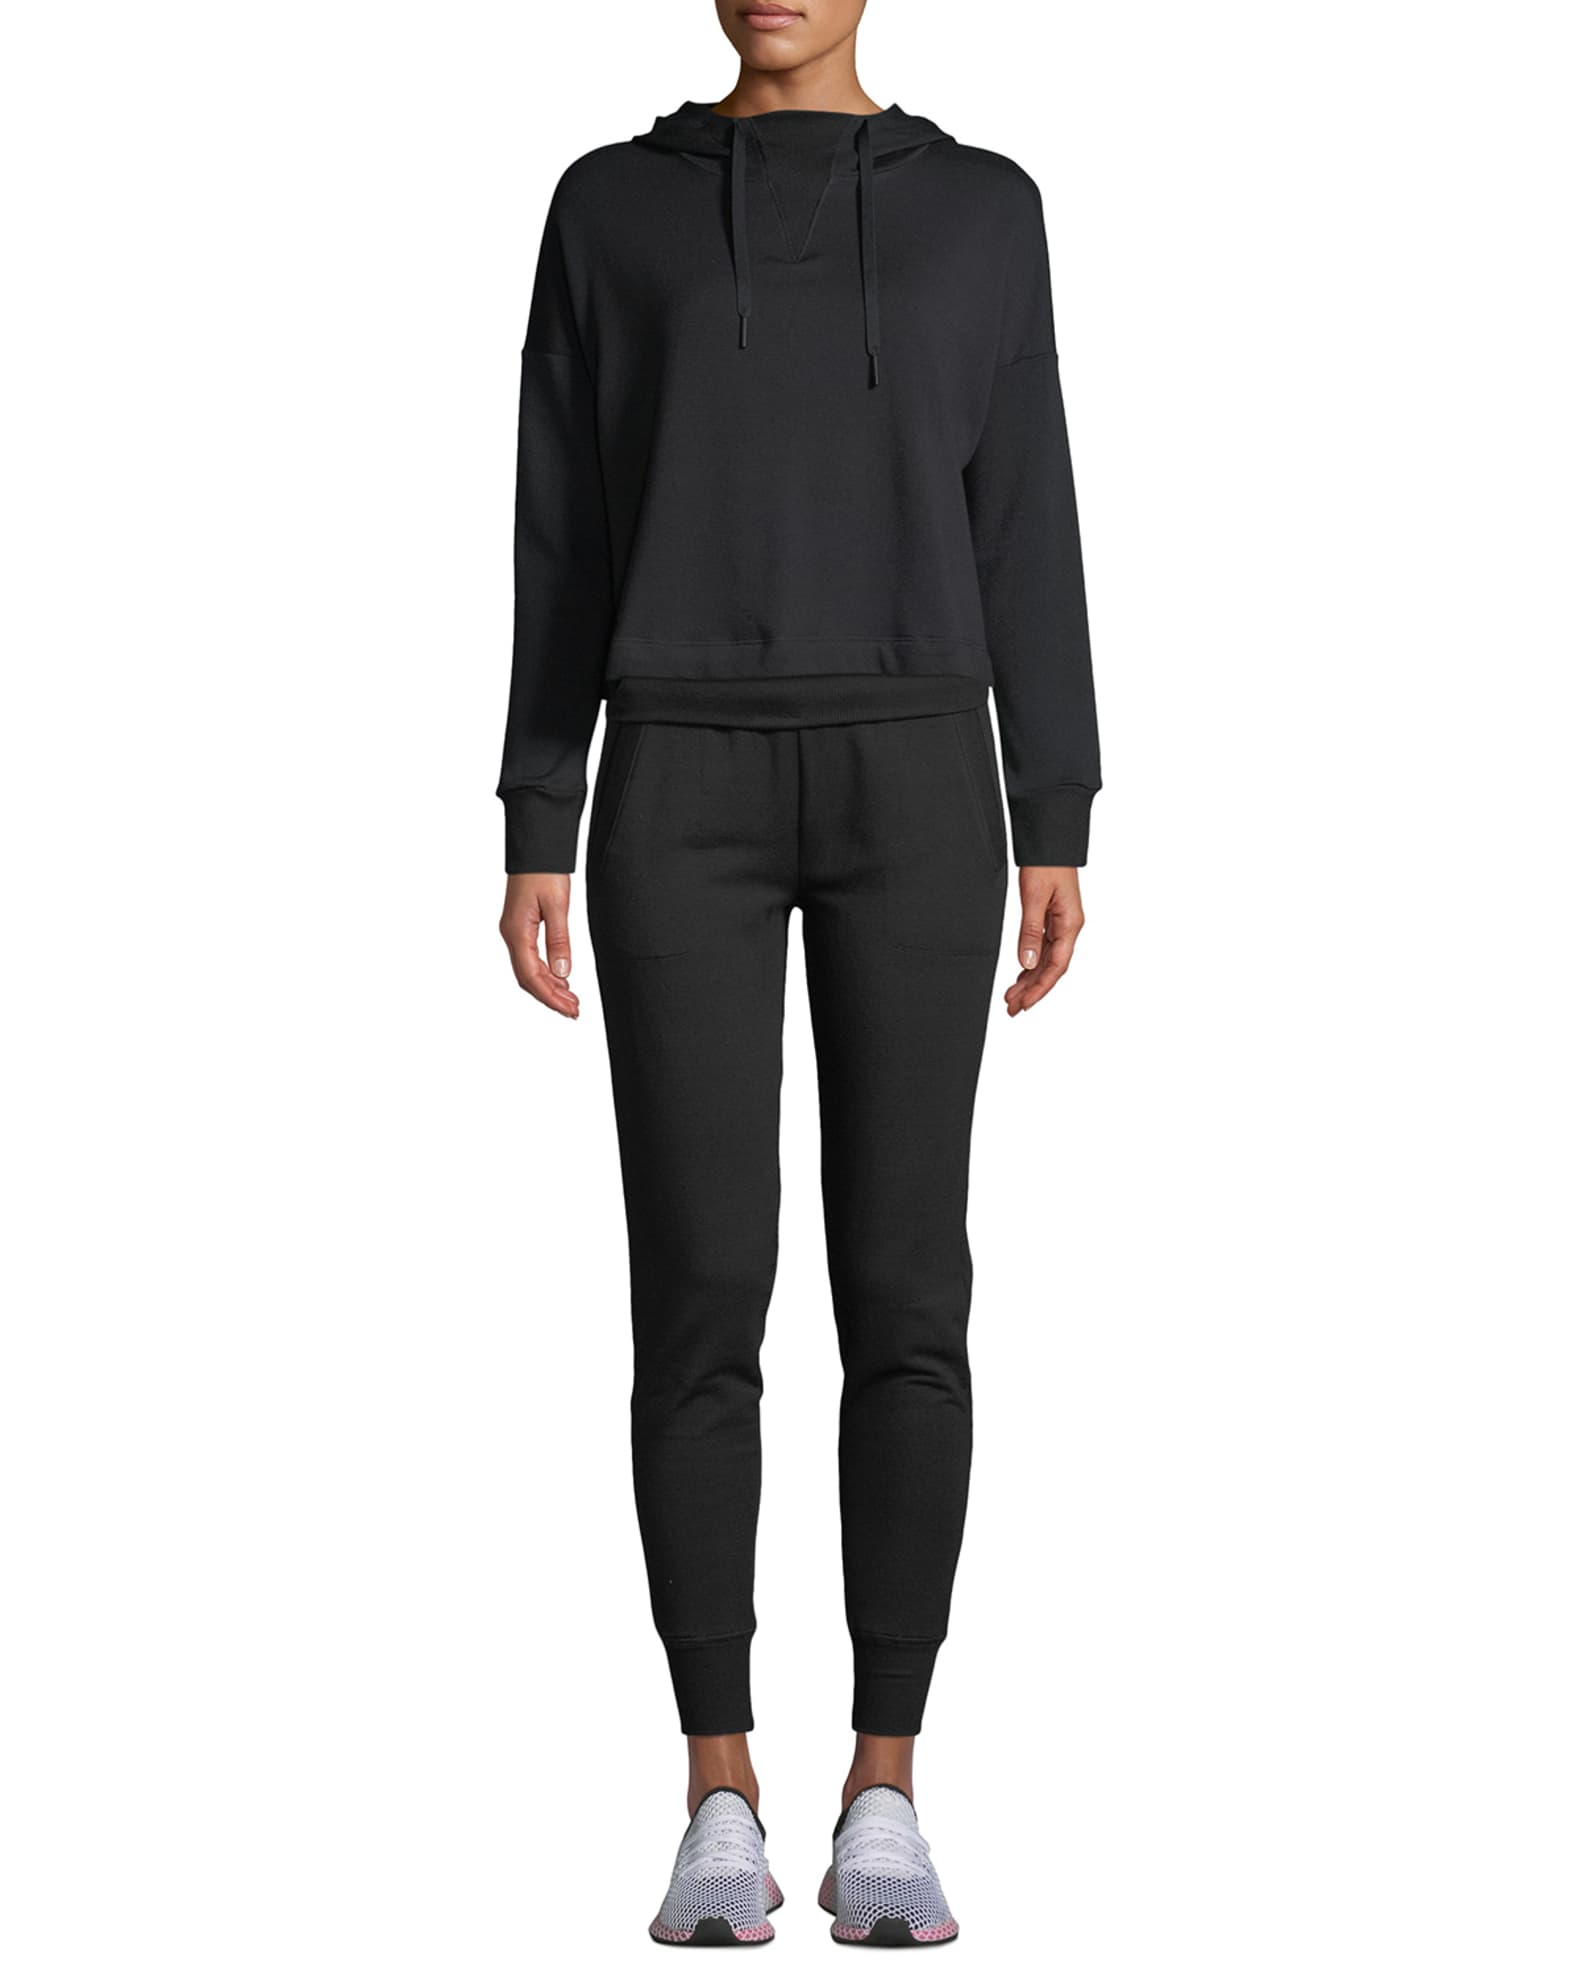 Beyond Yoga Cozy Fleece Foldover Sweatpant in Black